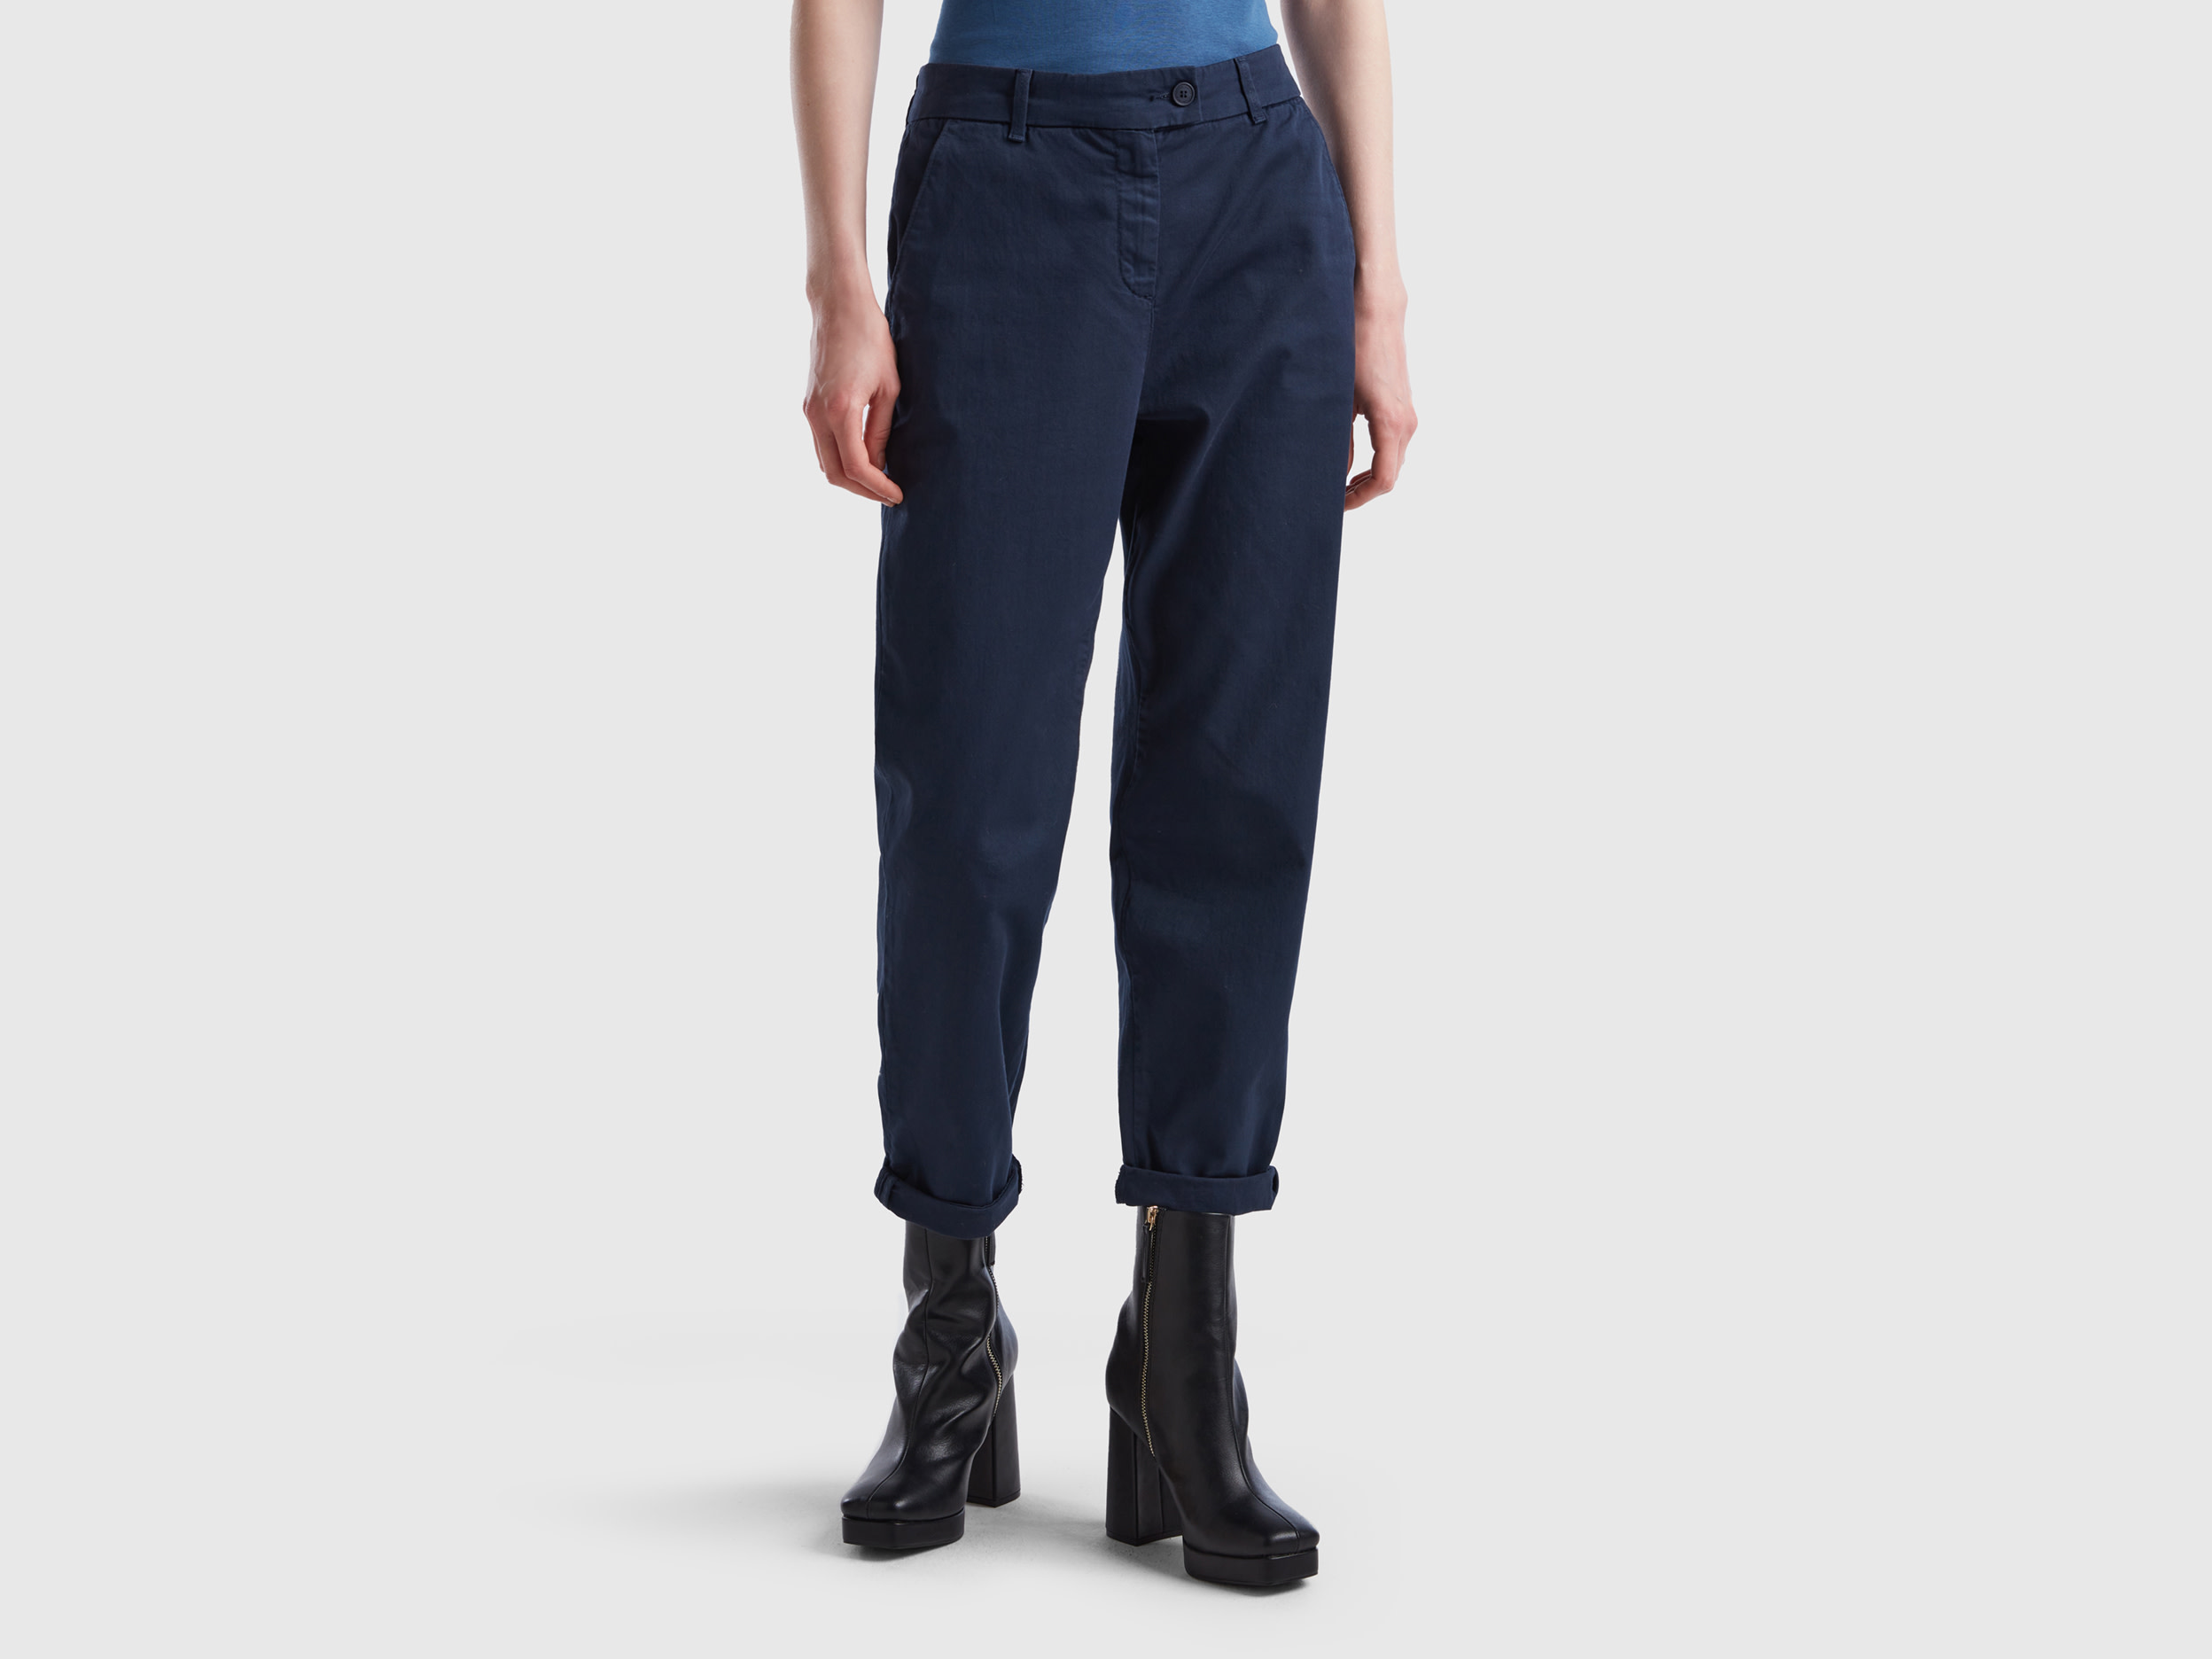 Benetton, Stretch Cotton Chino Trousers, size 8, Dark Blue, Women